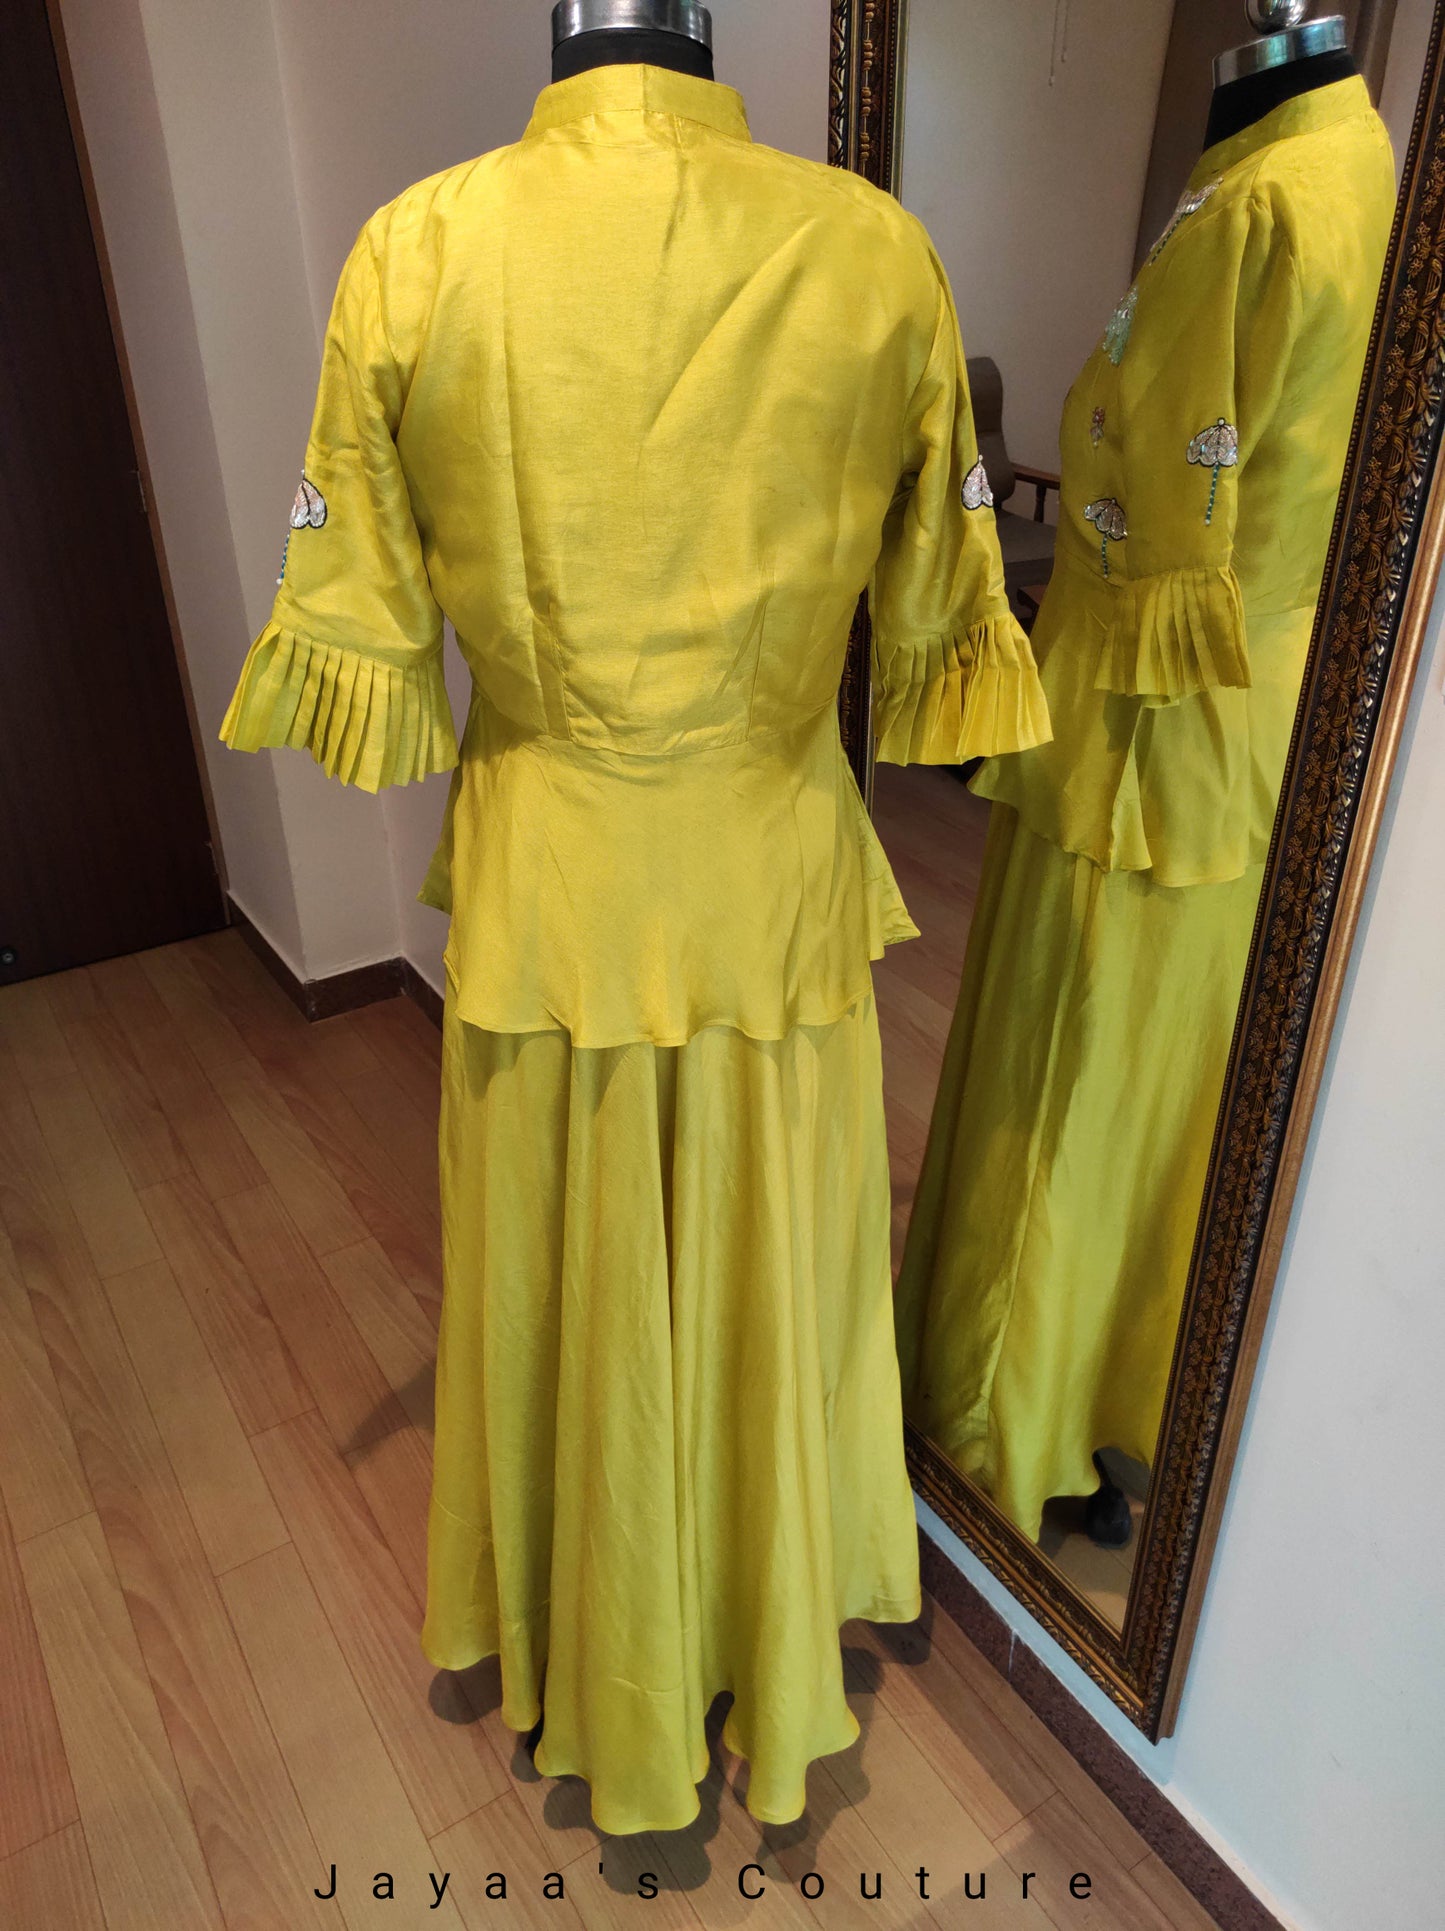 Greenish yellow gown with peplum jacket